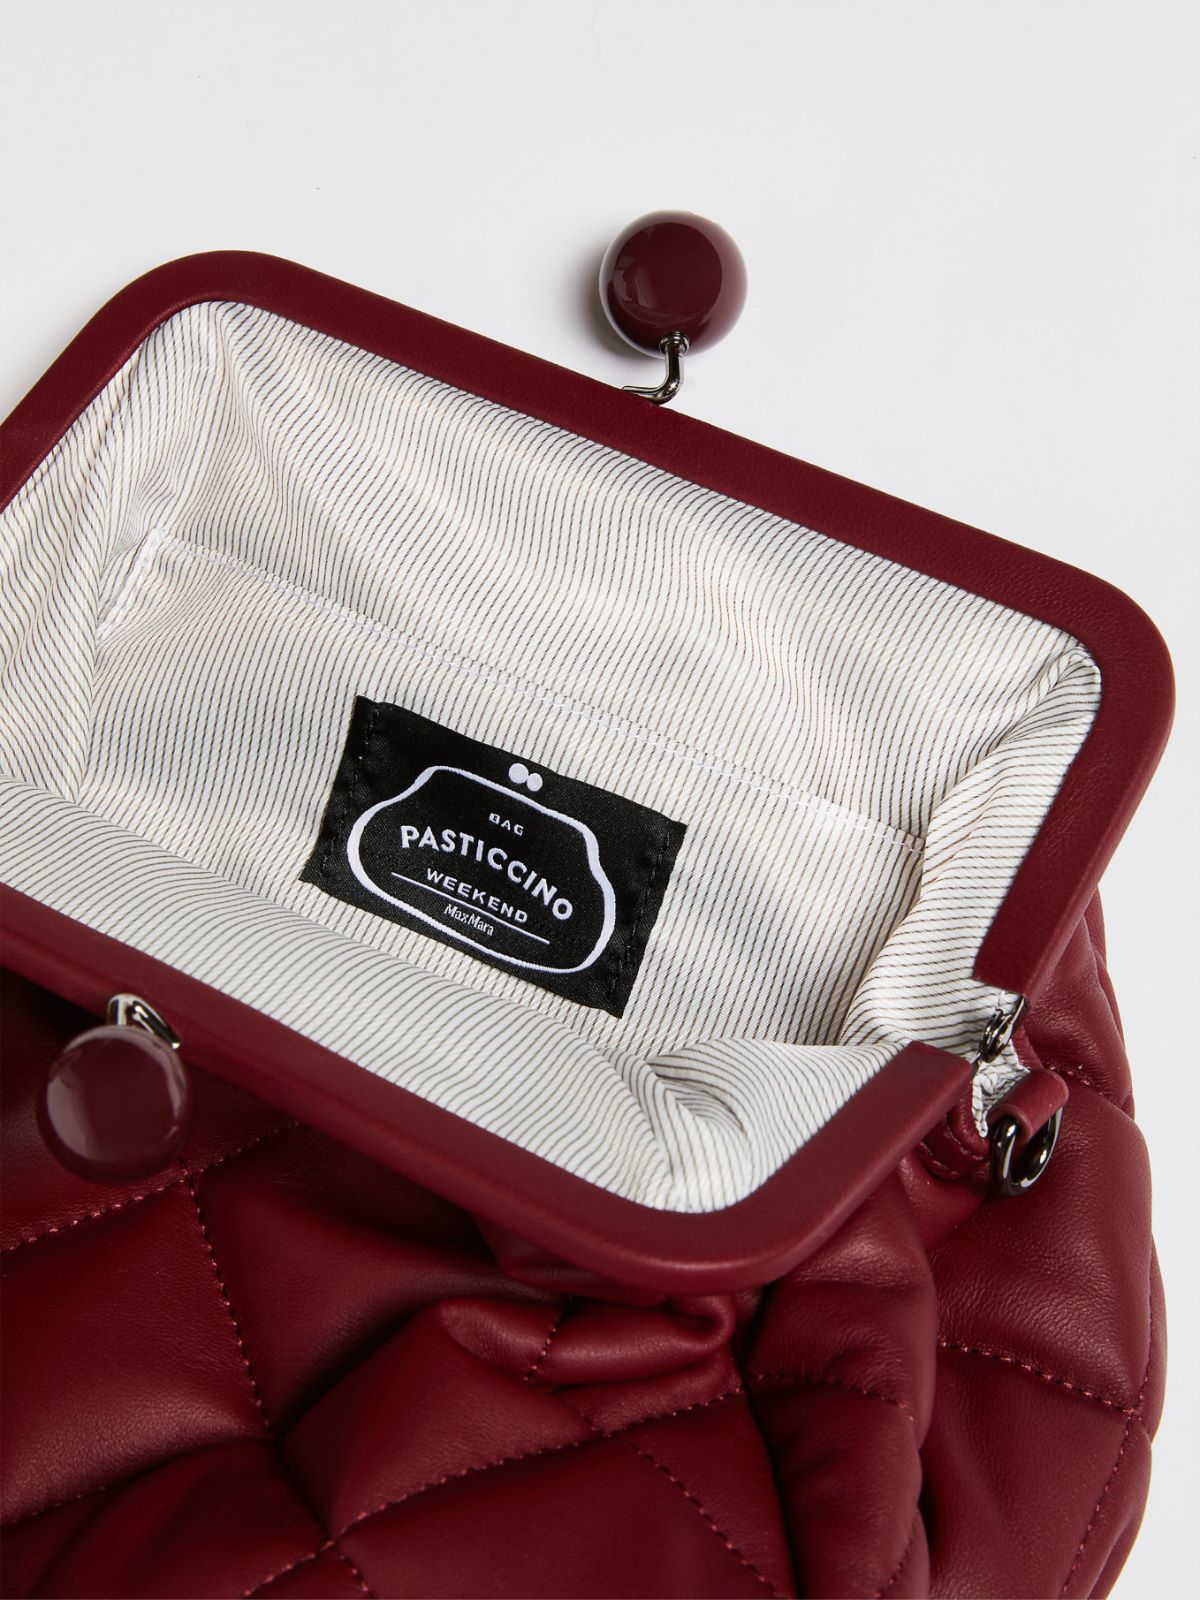 Medium Pasticcino Bag in nappa leather - BORDEAUX - Weekend Max Mara - 6